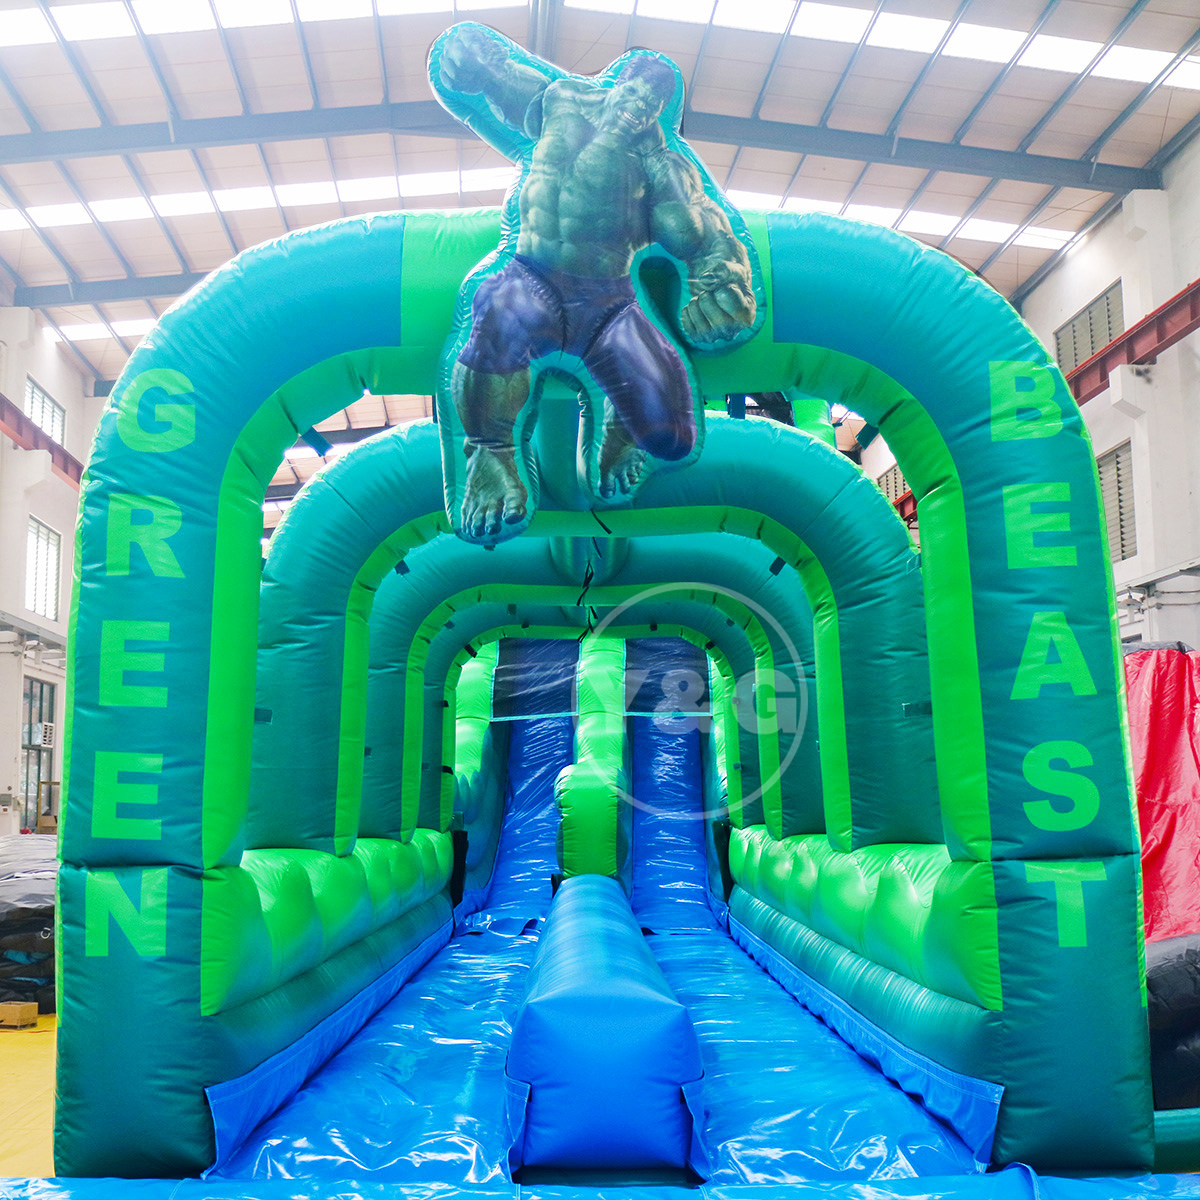 Inflatable Hulk SlideYG-104